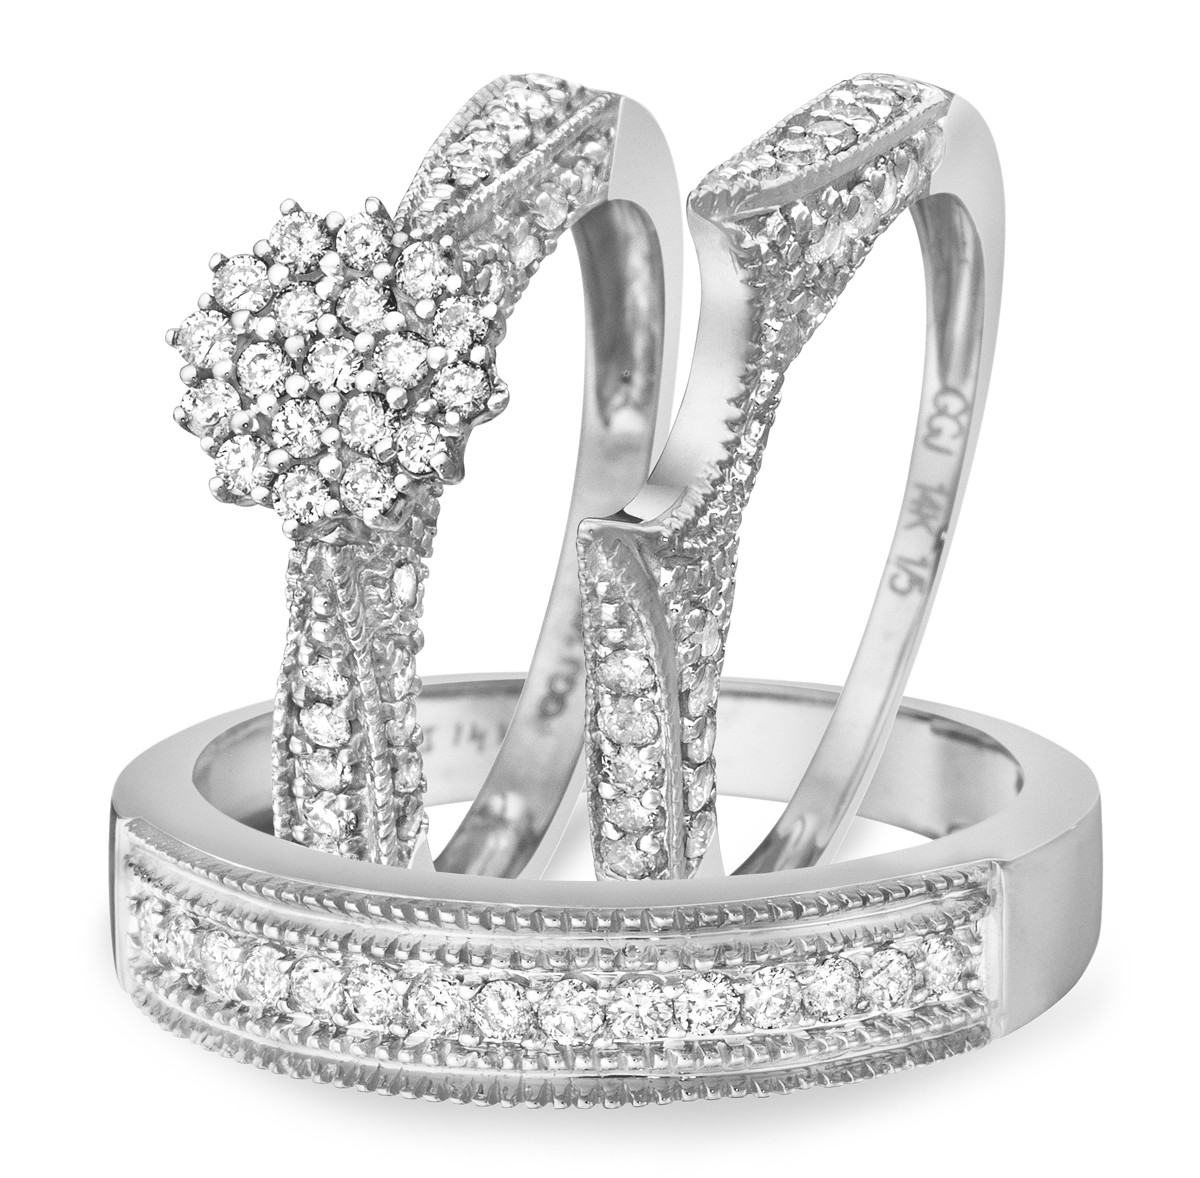 Trio Wedding Ring Sets
 1 Carat Diamond Trio Wedding Ring Set 14K White Gold